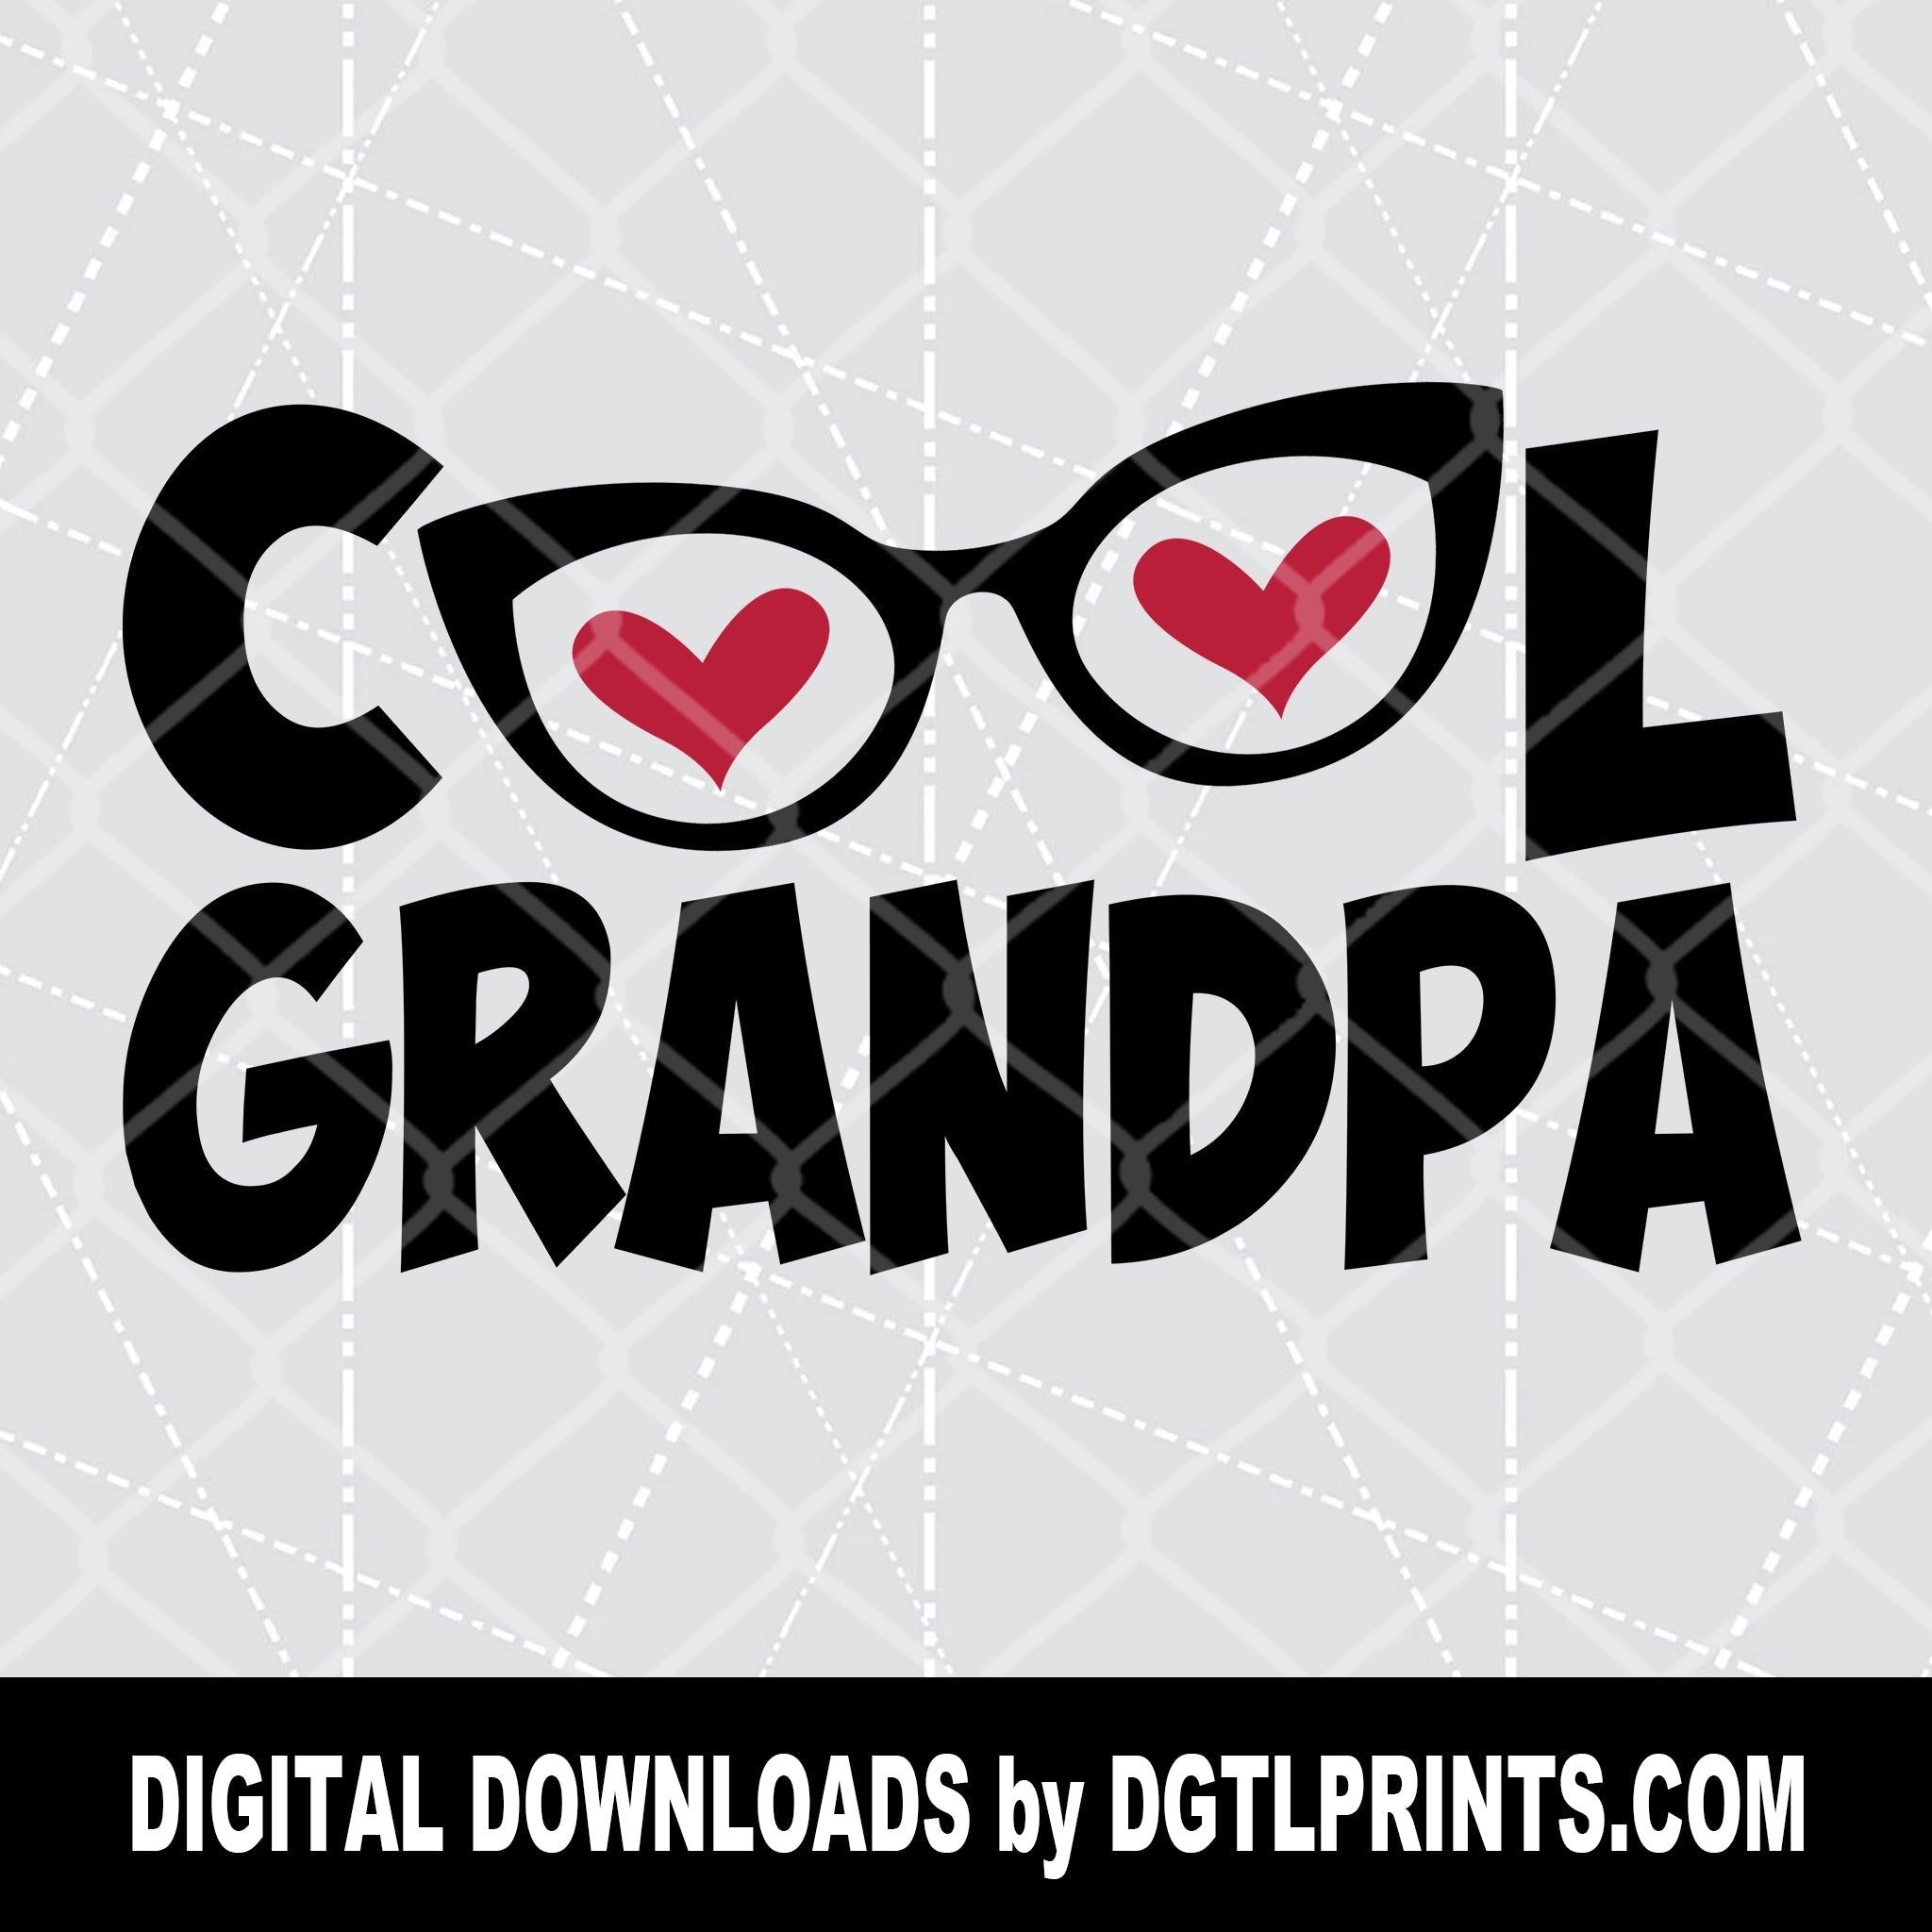 Cool Grandma - Customize with Any Nickname